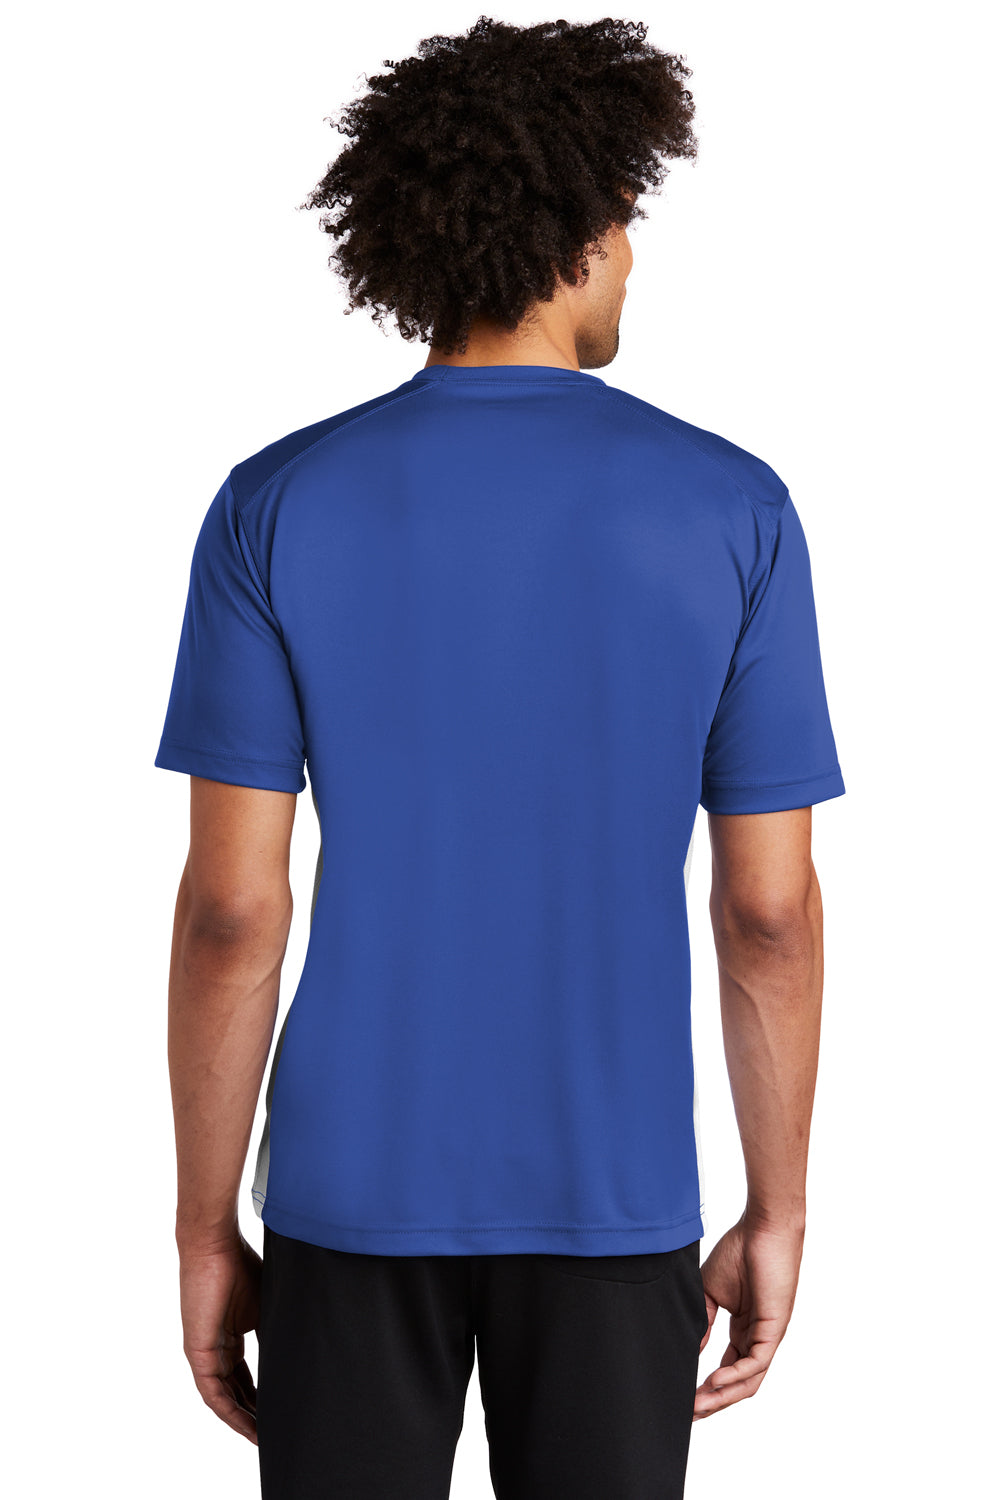 Sport-Tek T478 Mens Dry Zone Moisture Wicking Short Sleeve Crewneck T-Shirt Royal Blue Back